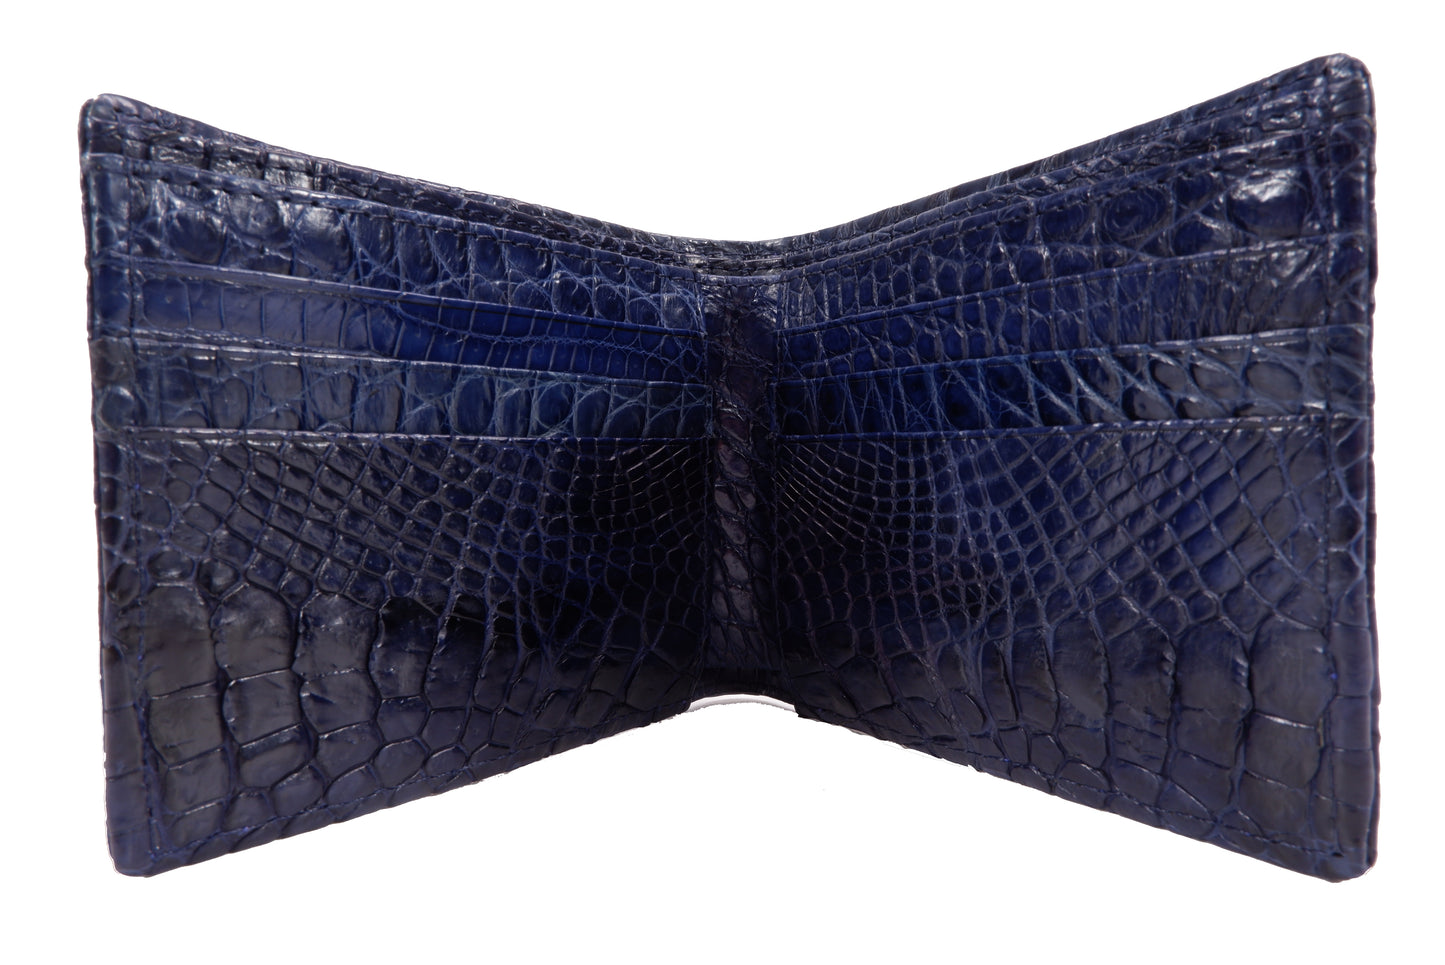 Genuine Crocodile Backbone Skin Leather Bifold Wallet with Crocodile Skin Interior